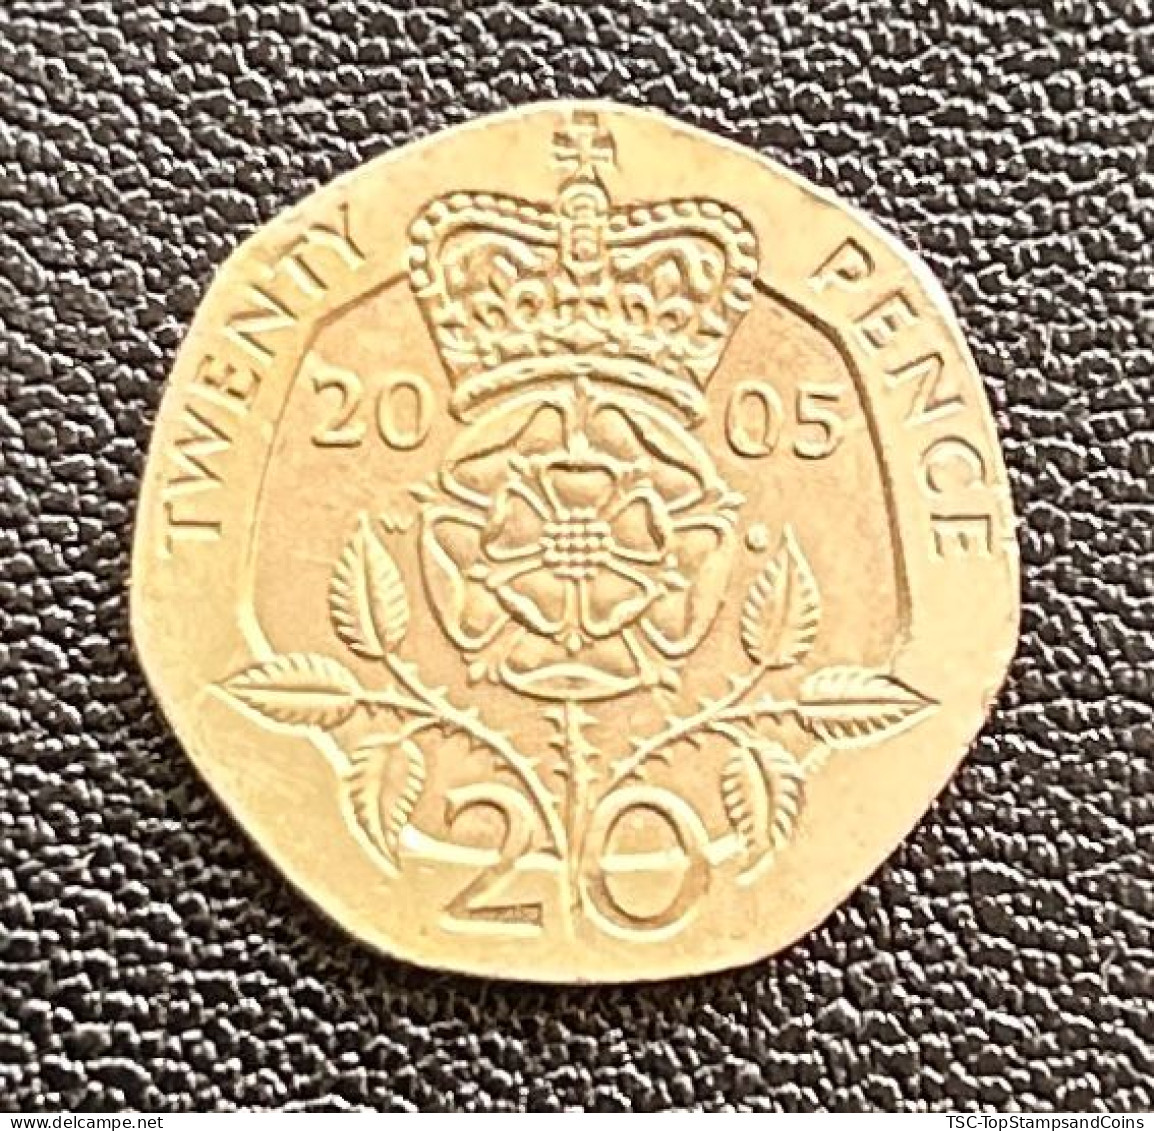 $$GB810 - Queen Elizabeth II - 4th Portrait - Tudor Rose - 20 Pence Coin - Great-Britain - 2005 - 20 Pence